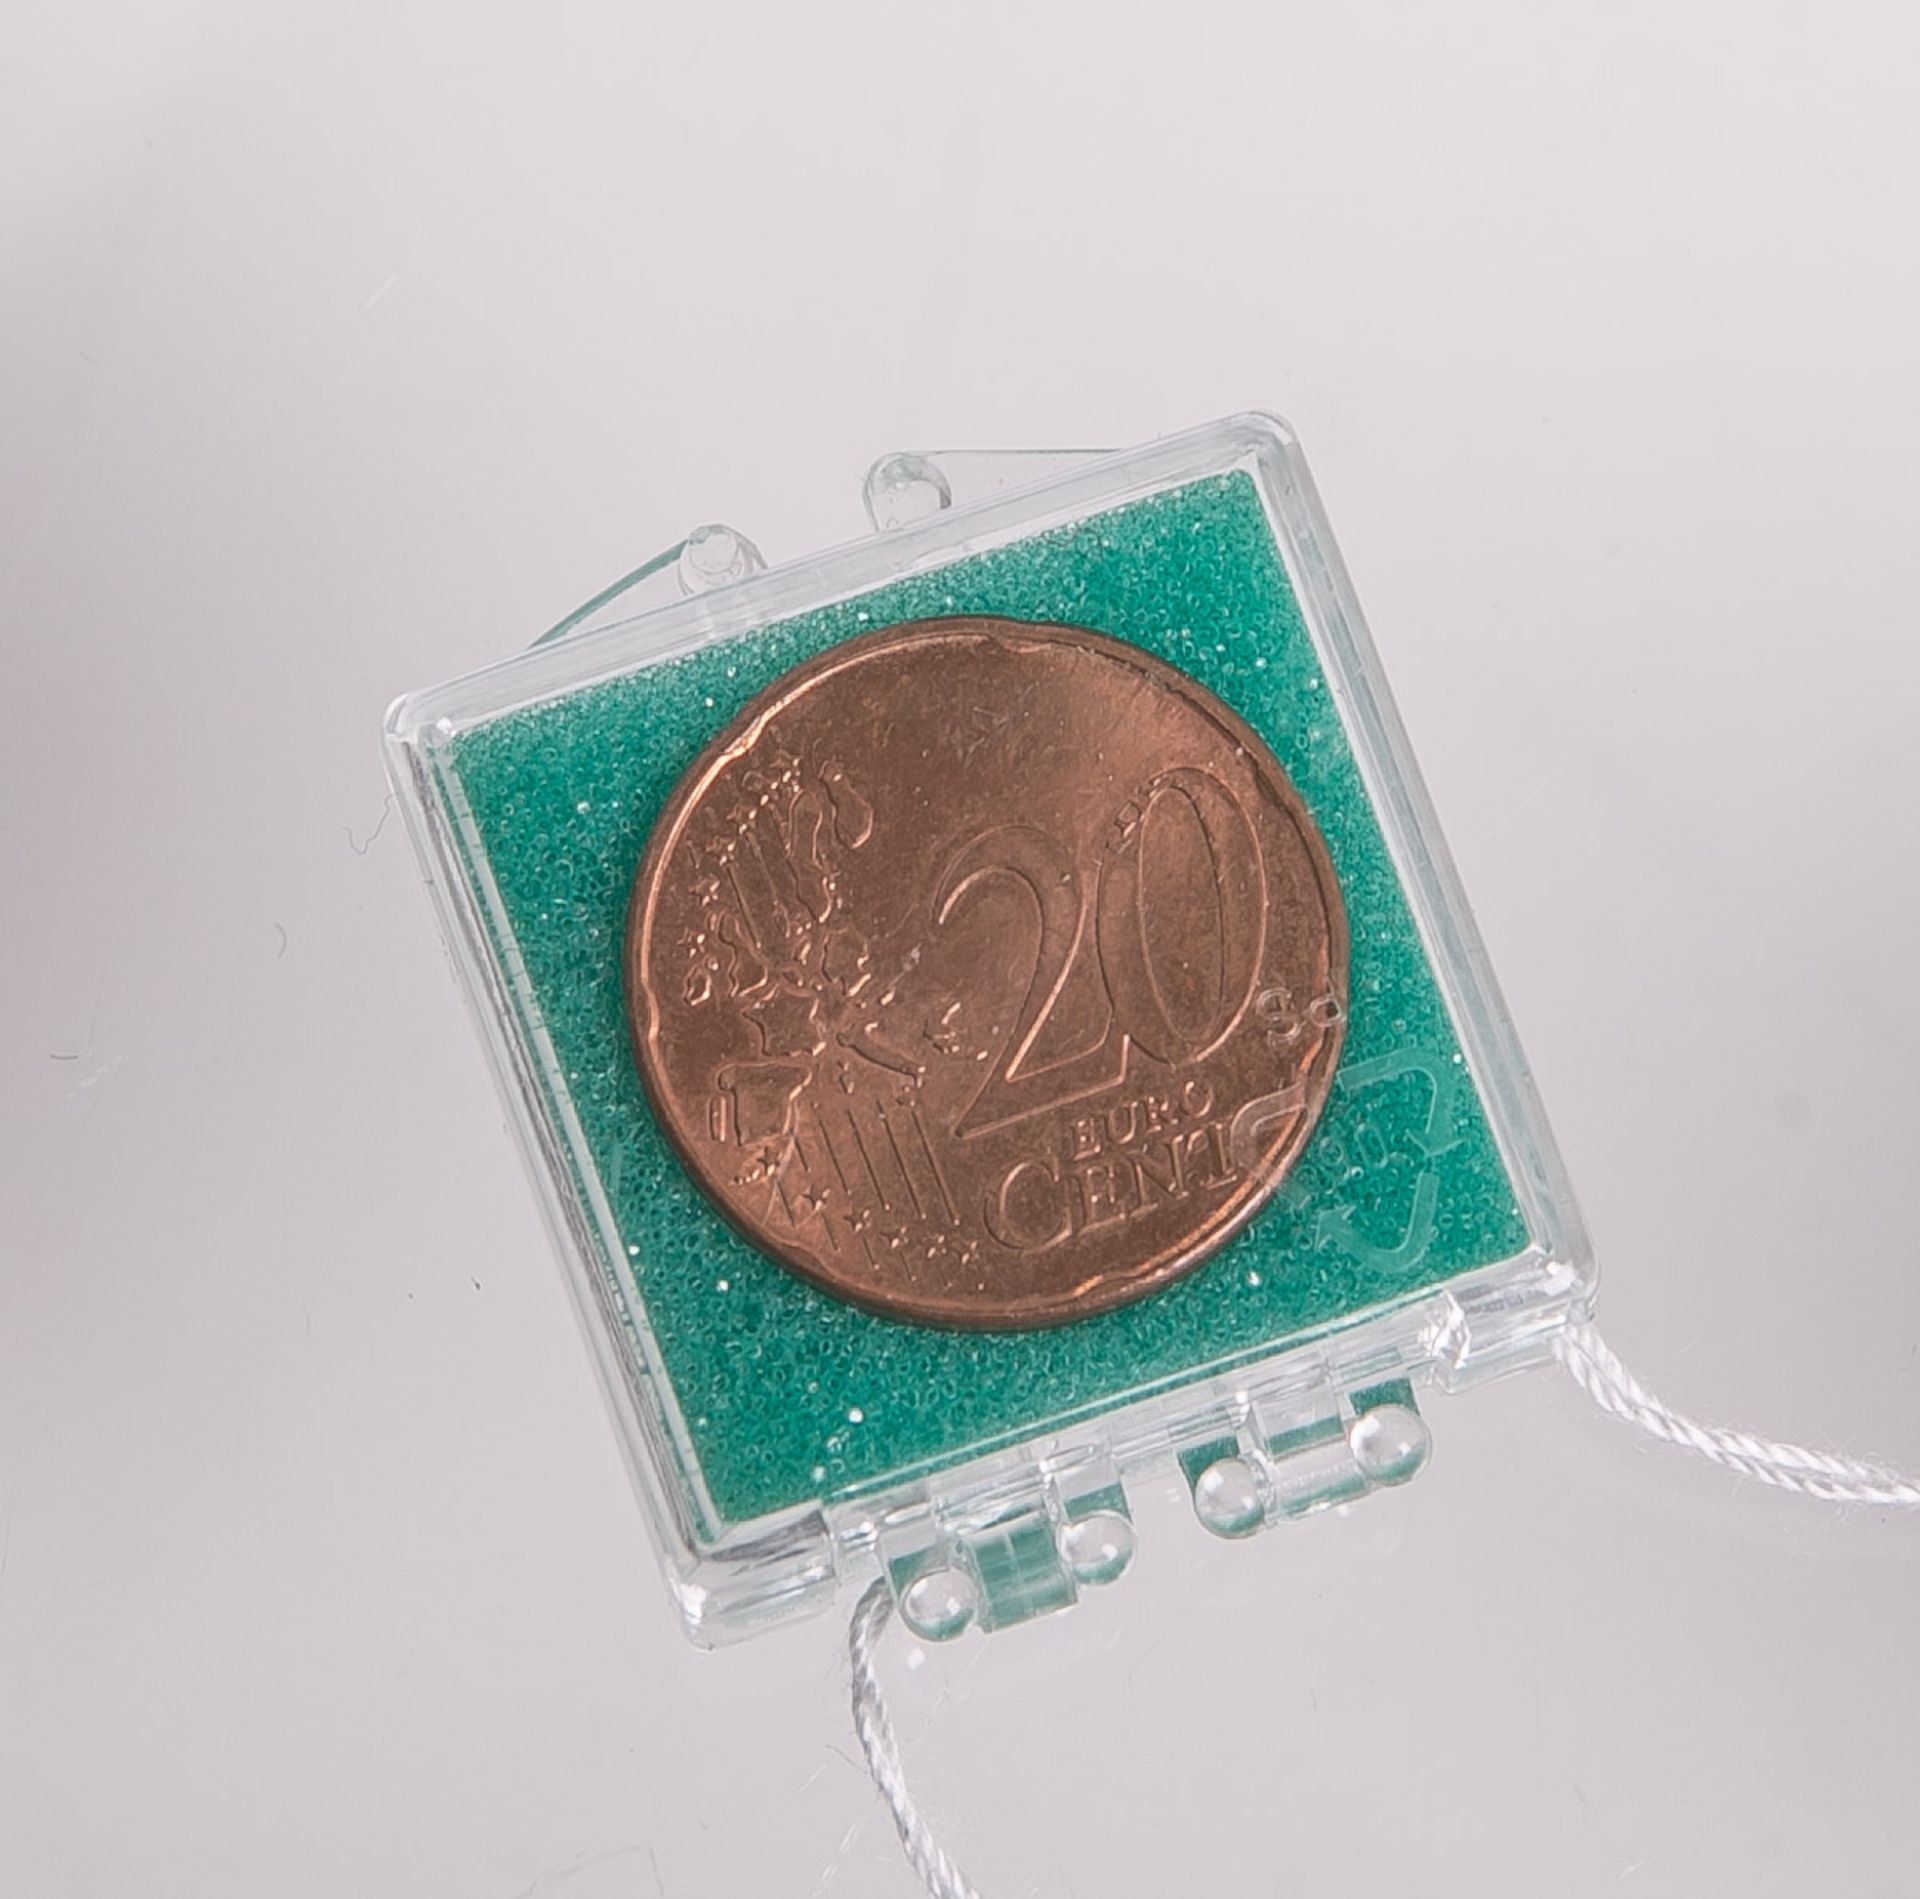 Fehlprägung 20 Cent / Euro (2006, F)